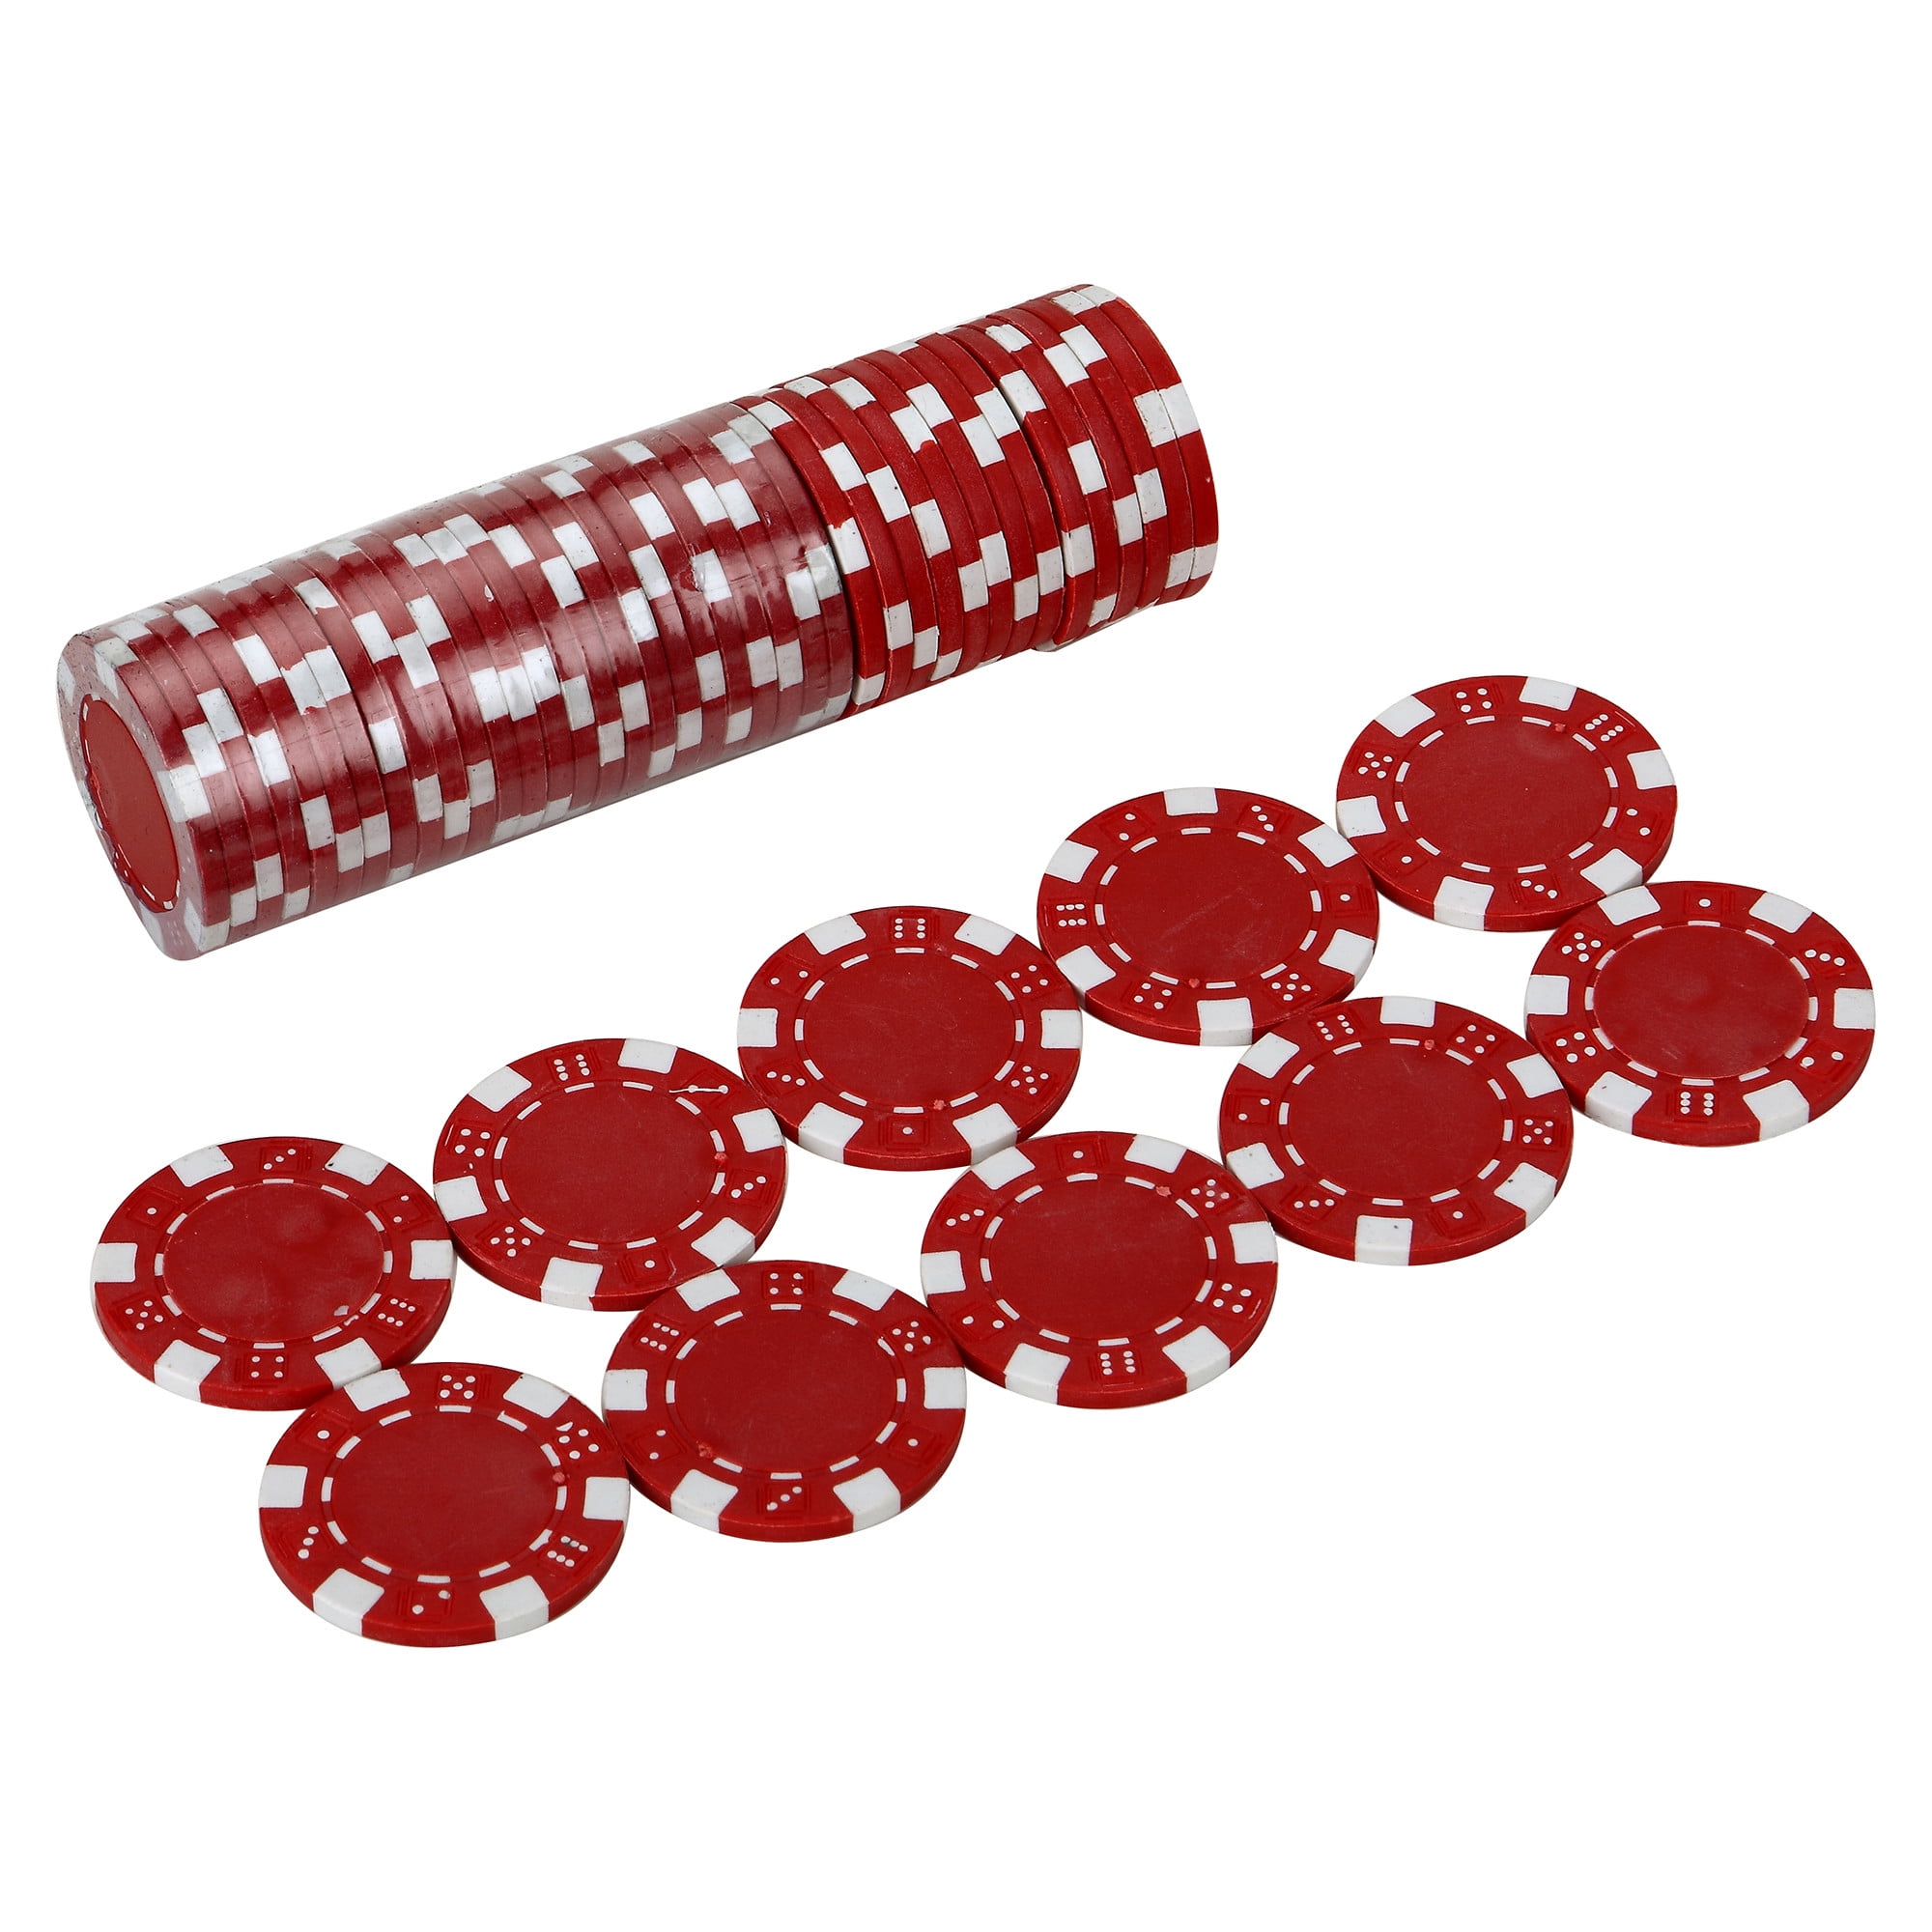 Hathaway Monte Carlo 500-Piece Poker Set